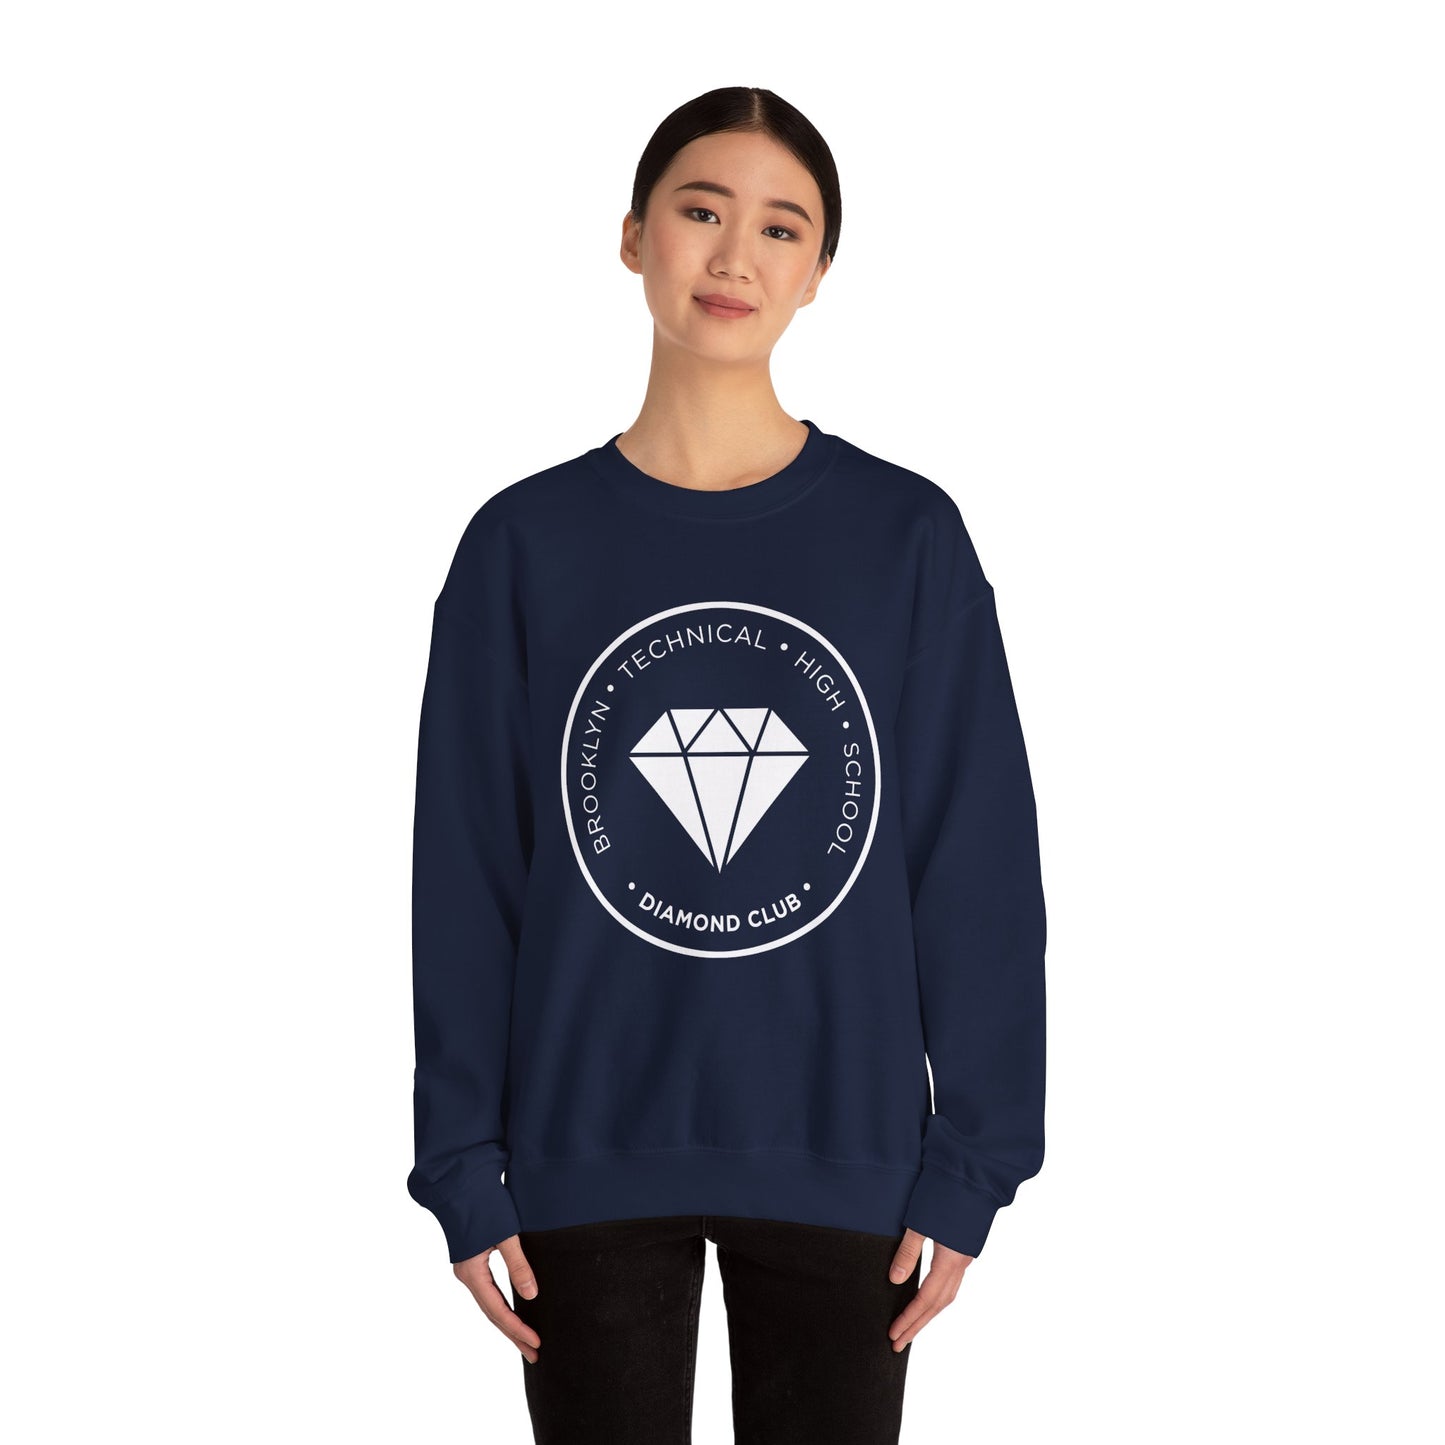 Diamond Club - Men's Heavy Blend Crewneck Sweatshirt